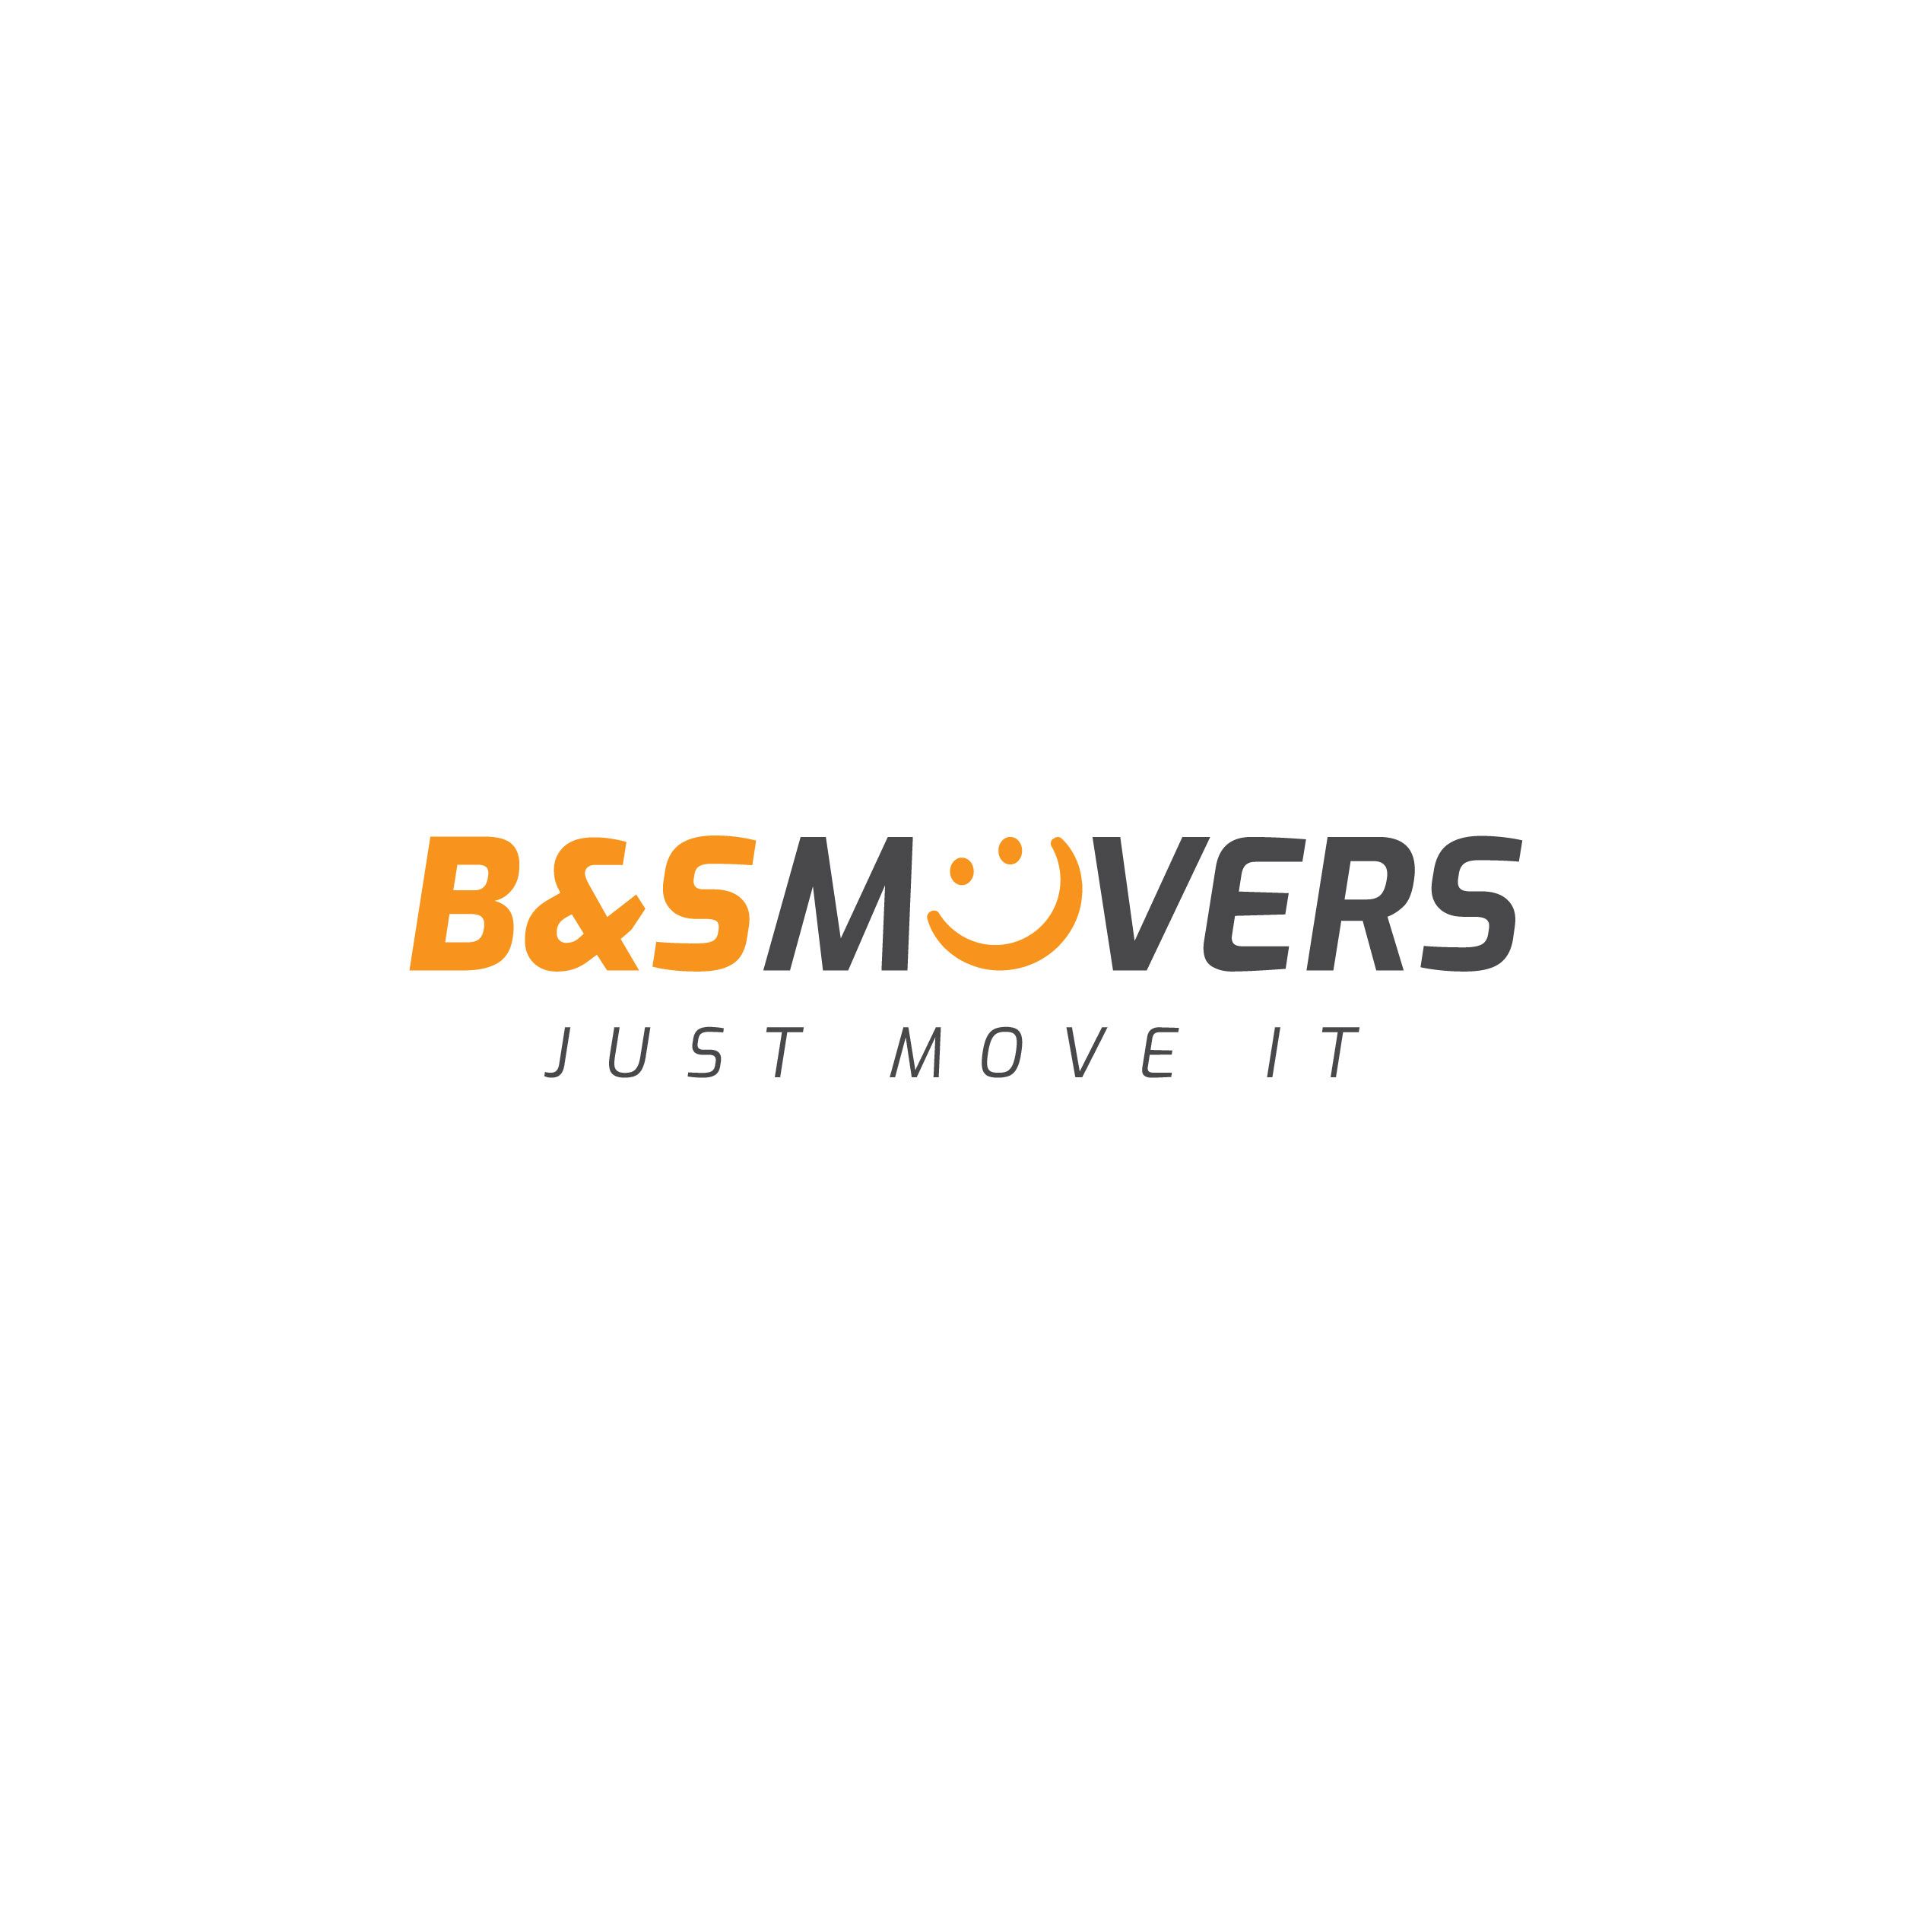 B&S MOVERS - Logo.jpg